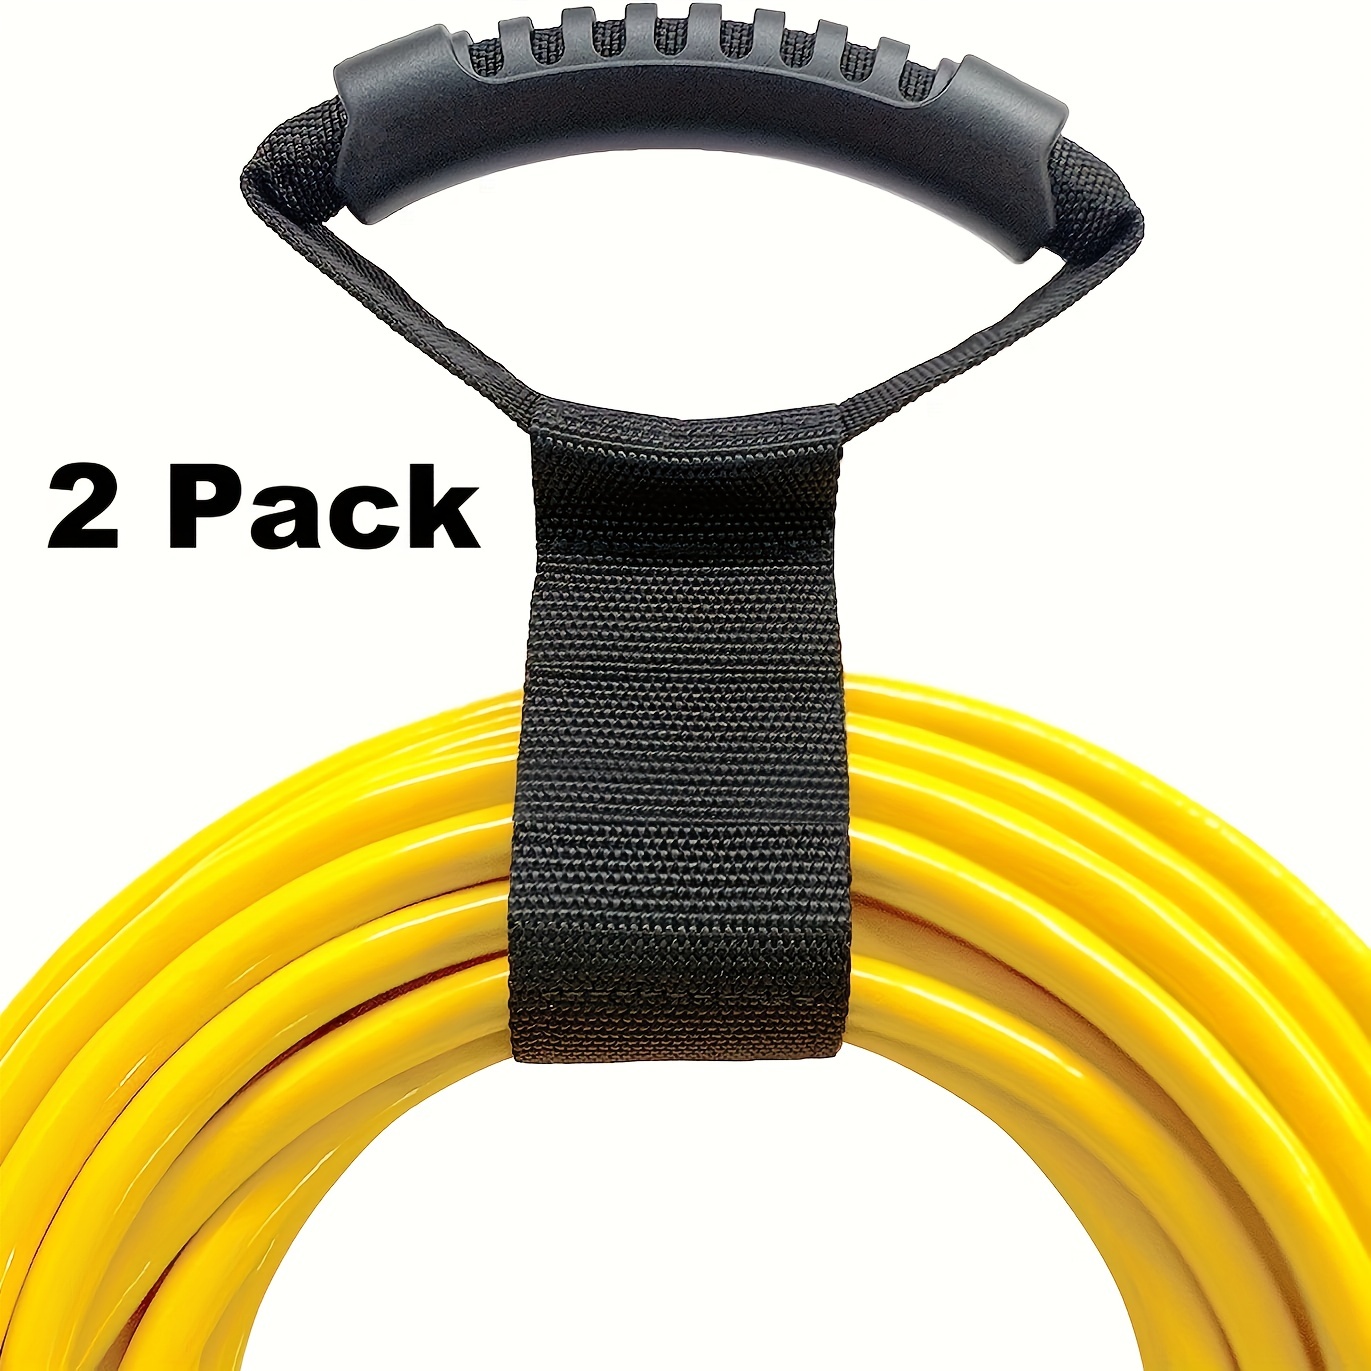 9 Pack Extension Cord Holder organizer, Heavy Duty Storage Straps Fit –  Lubansir Storage - Hook & Loop Storage Straps, Cable Management & More!